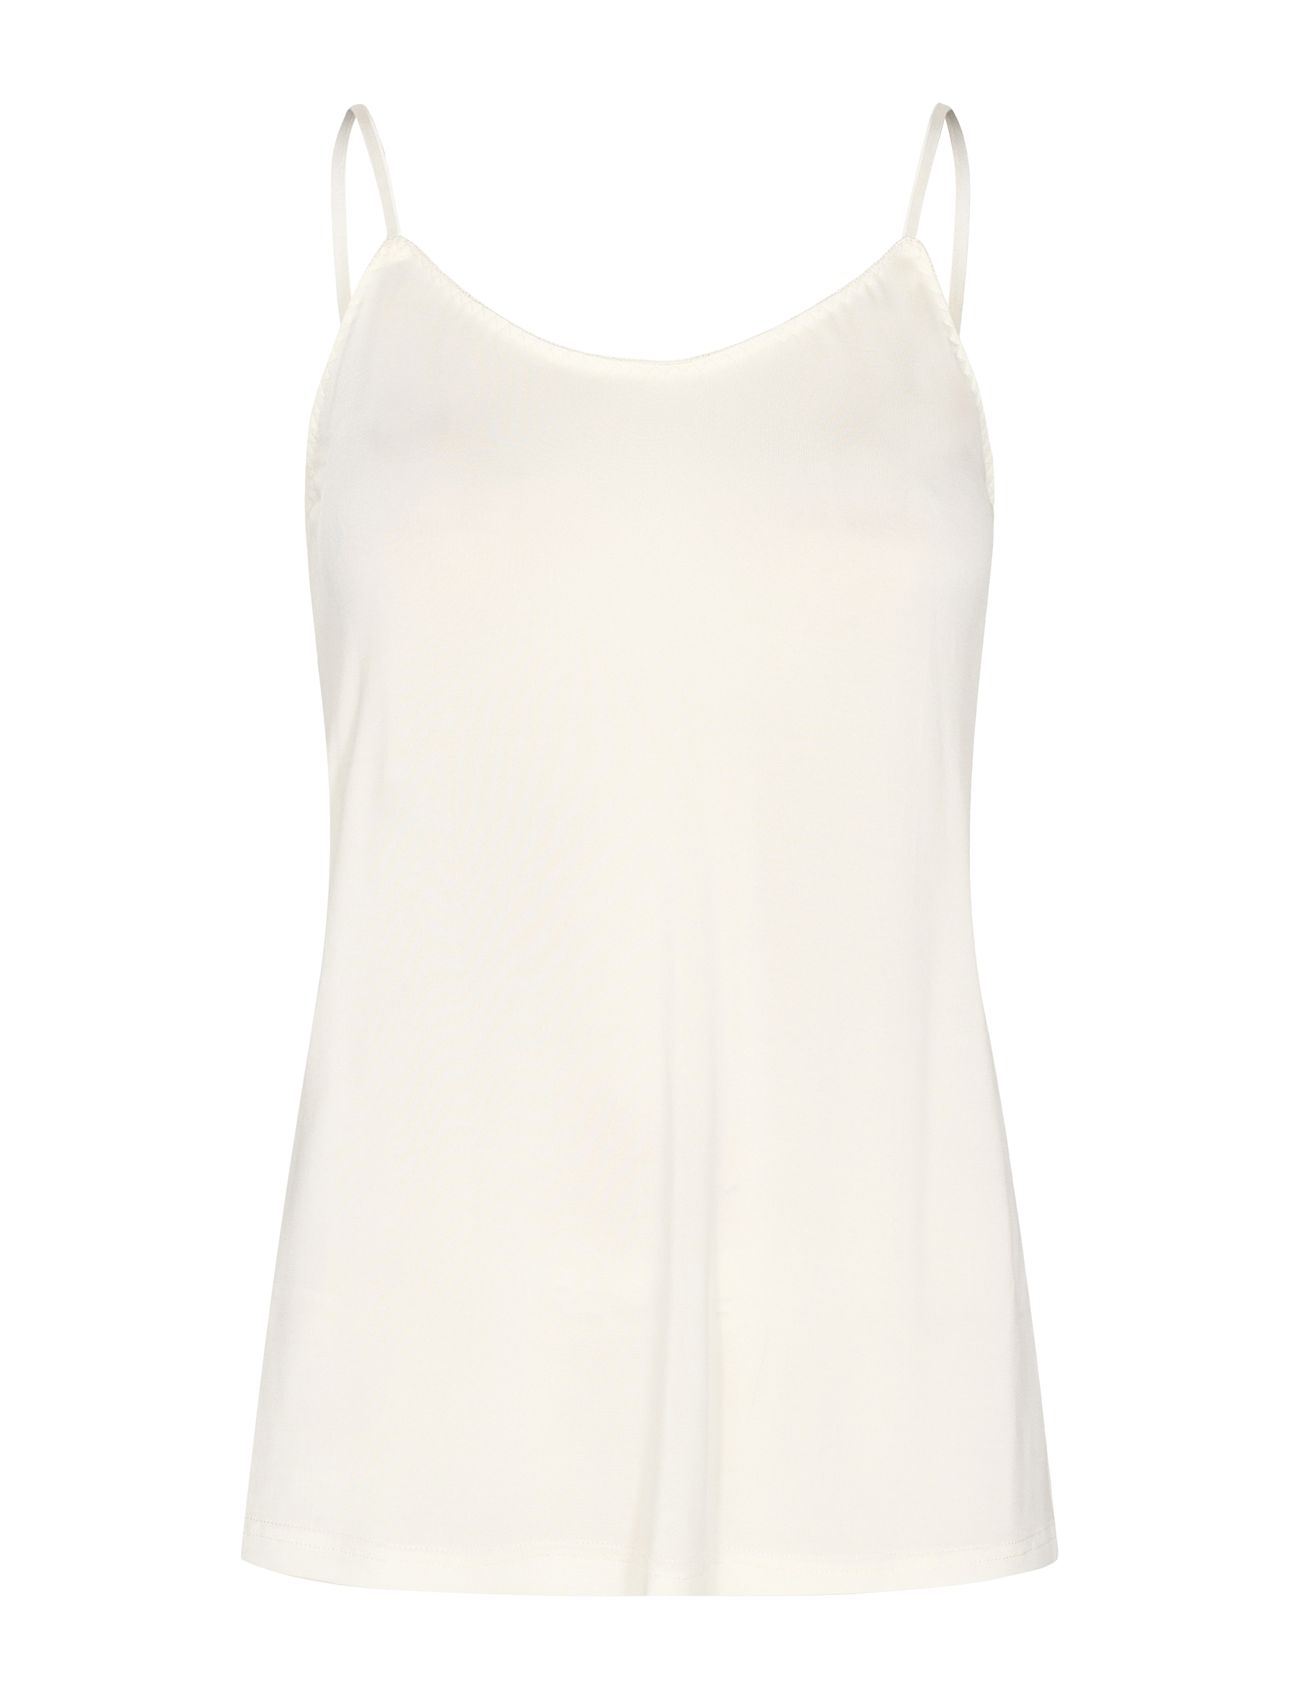 Lr-Caro Tops T-shirts & Tops Sleeveless White Levete Room